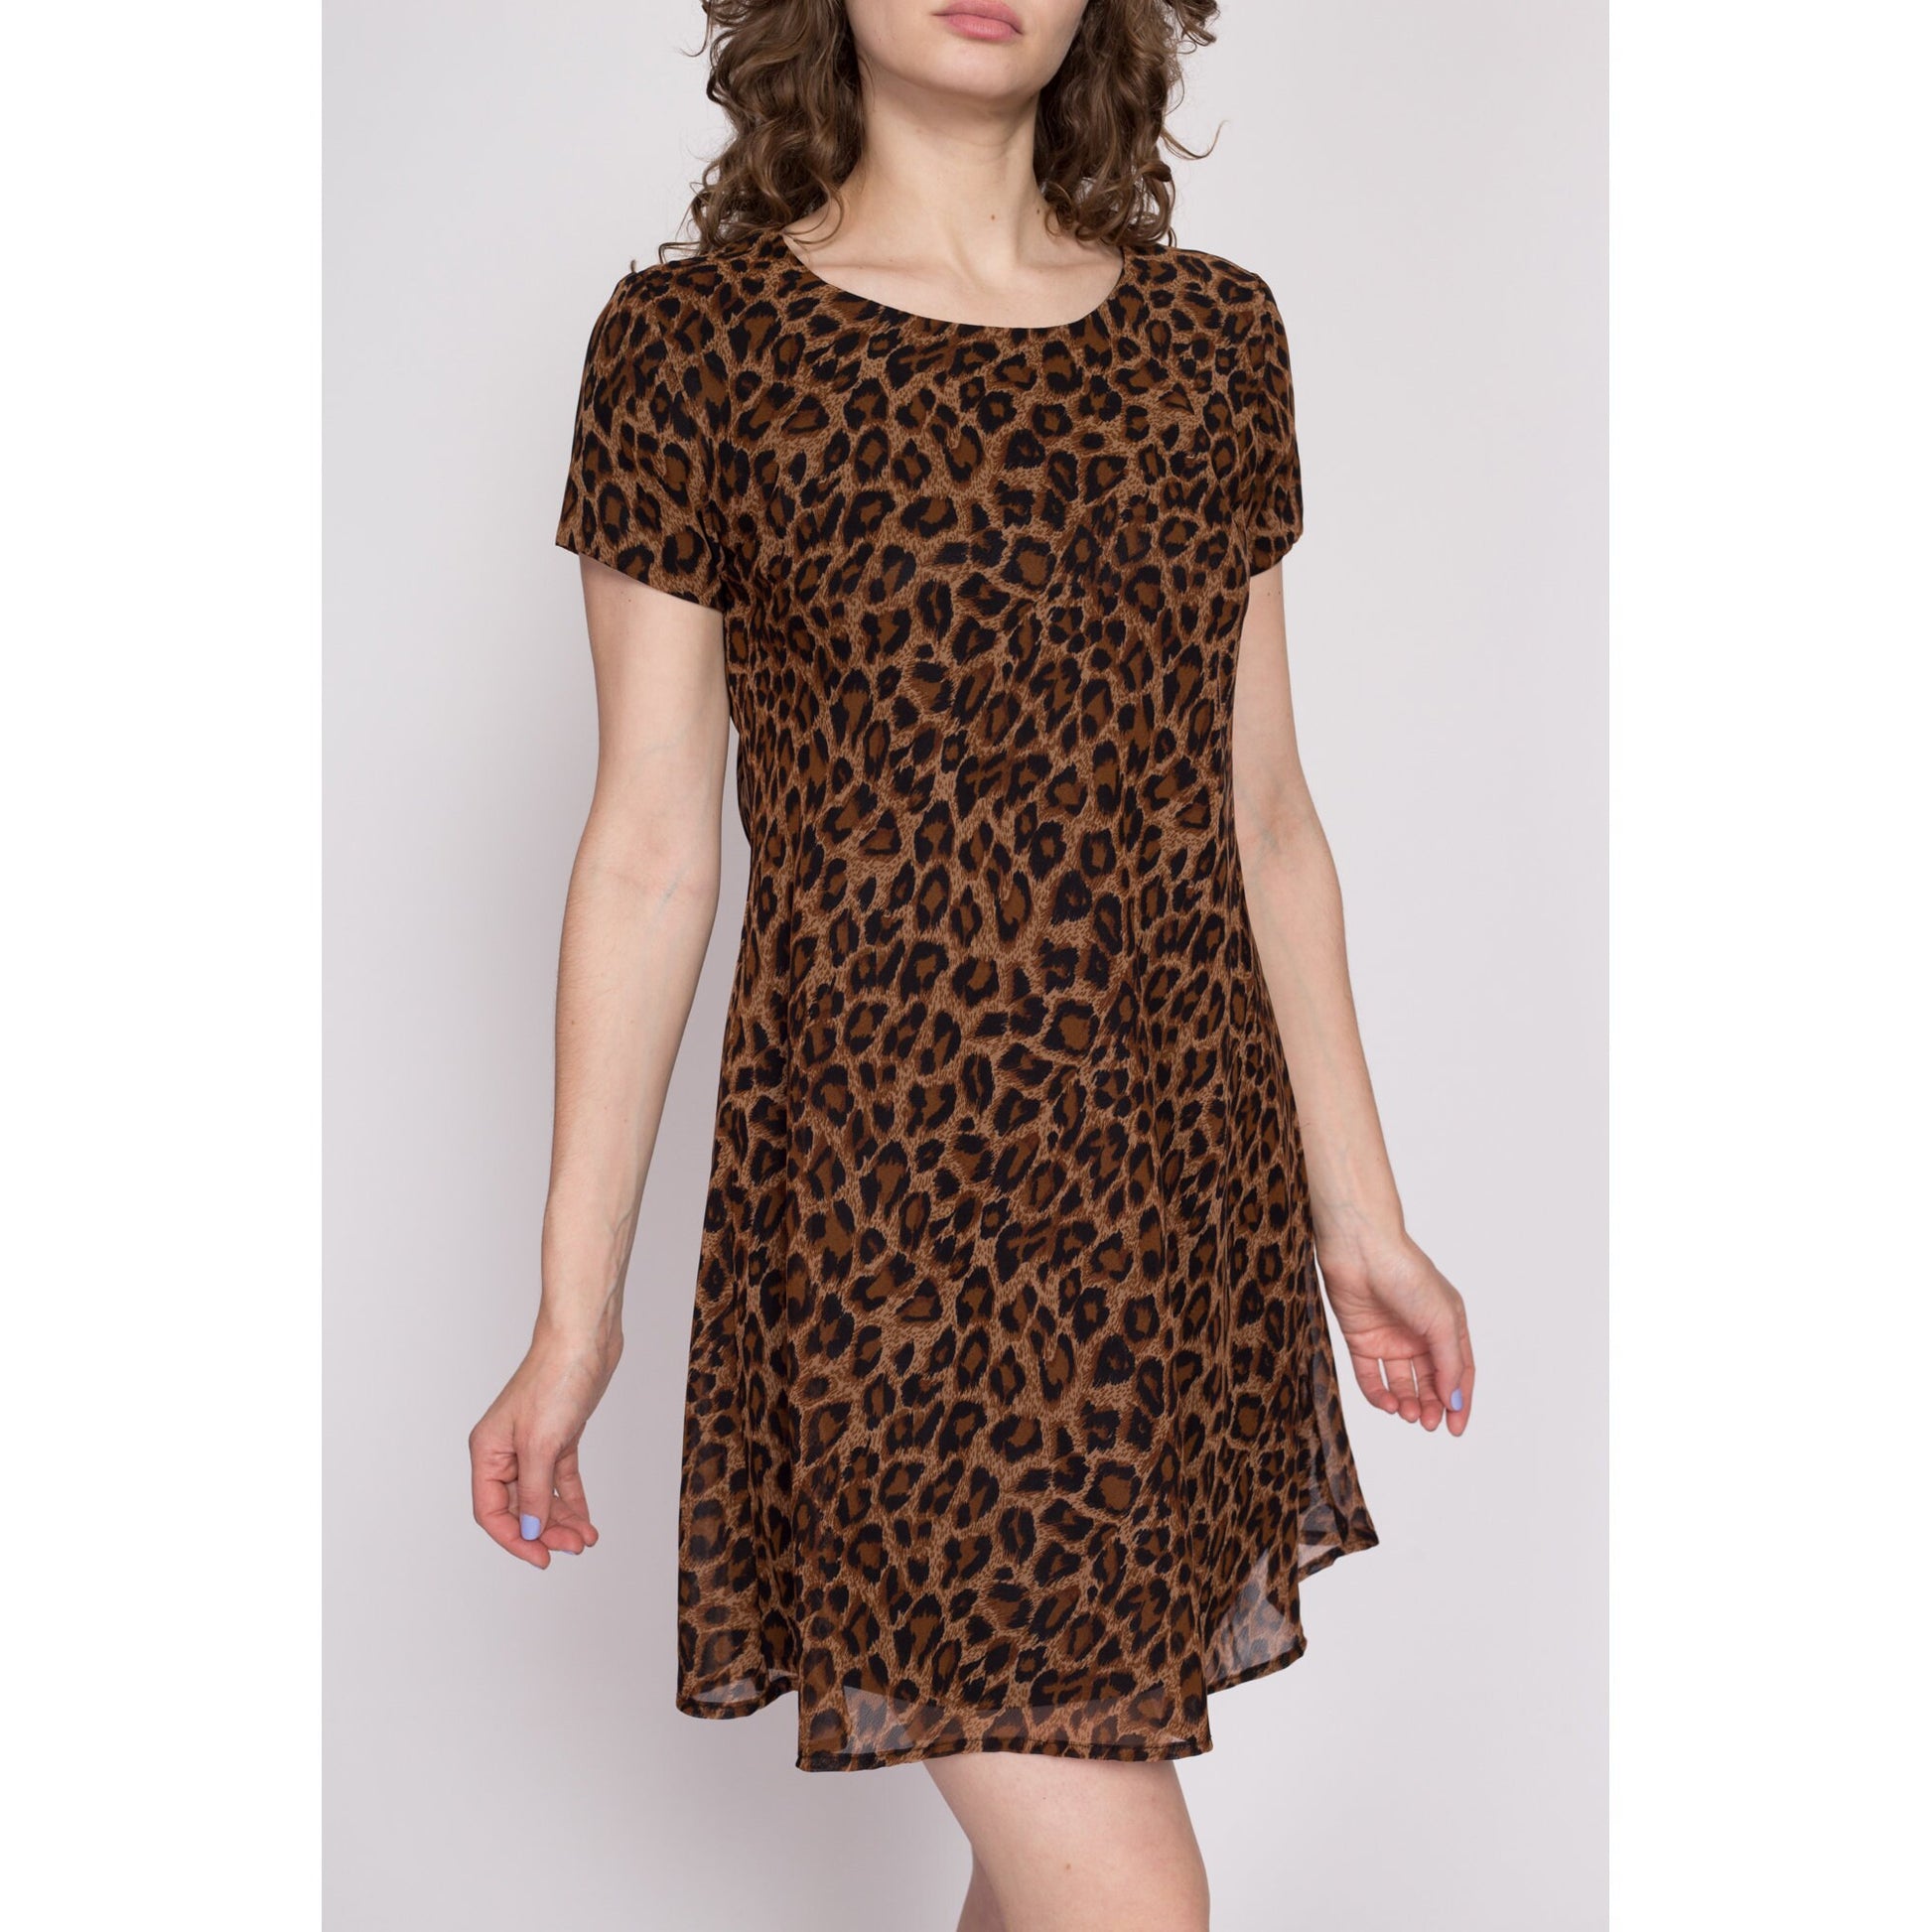 90s Leopard Print Babydoll Dress - Medium | Vintage Boho Grunge Short Sleeve Mini Dress